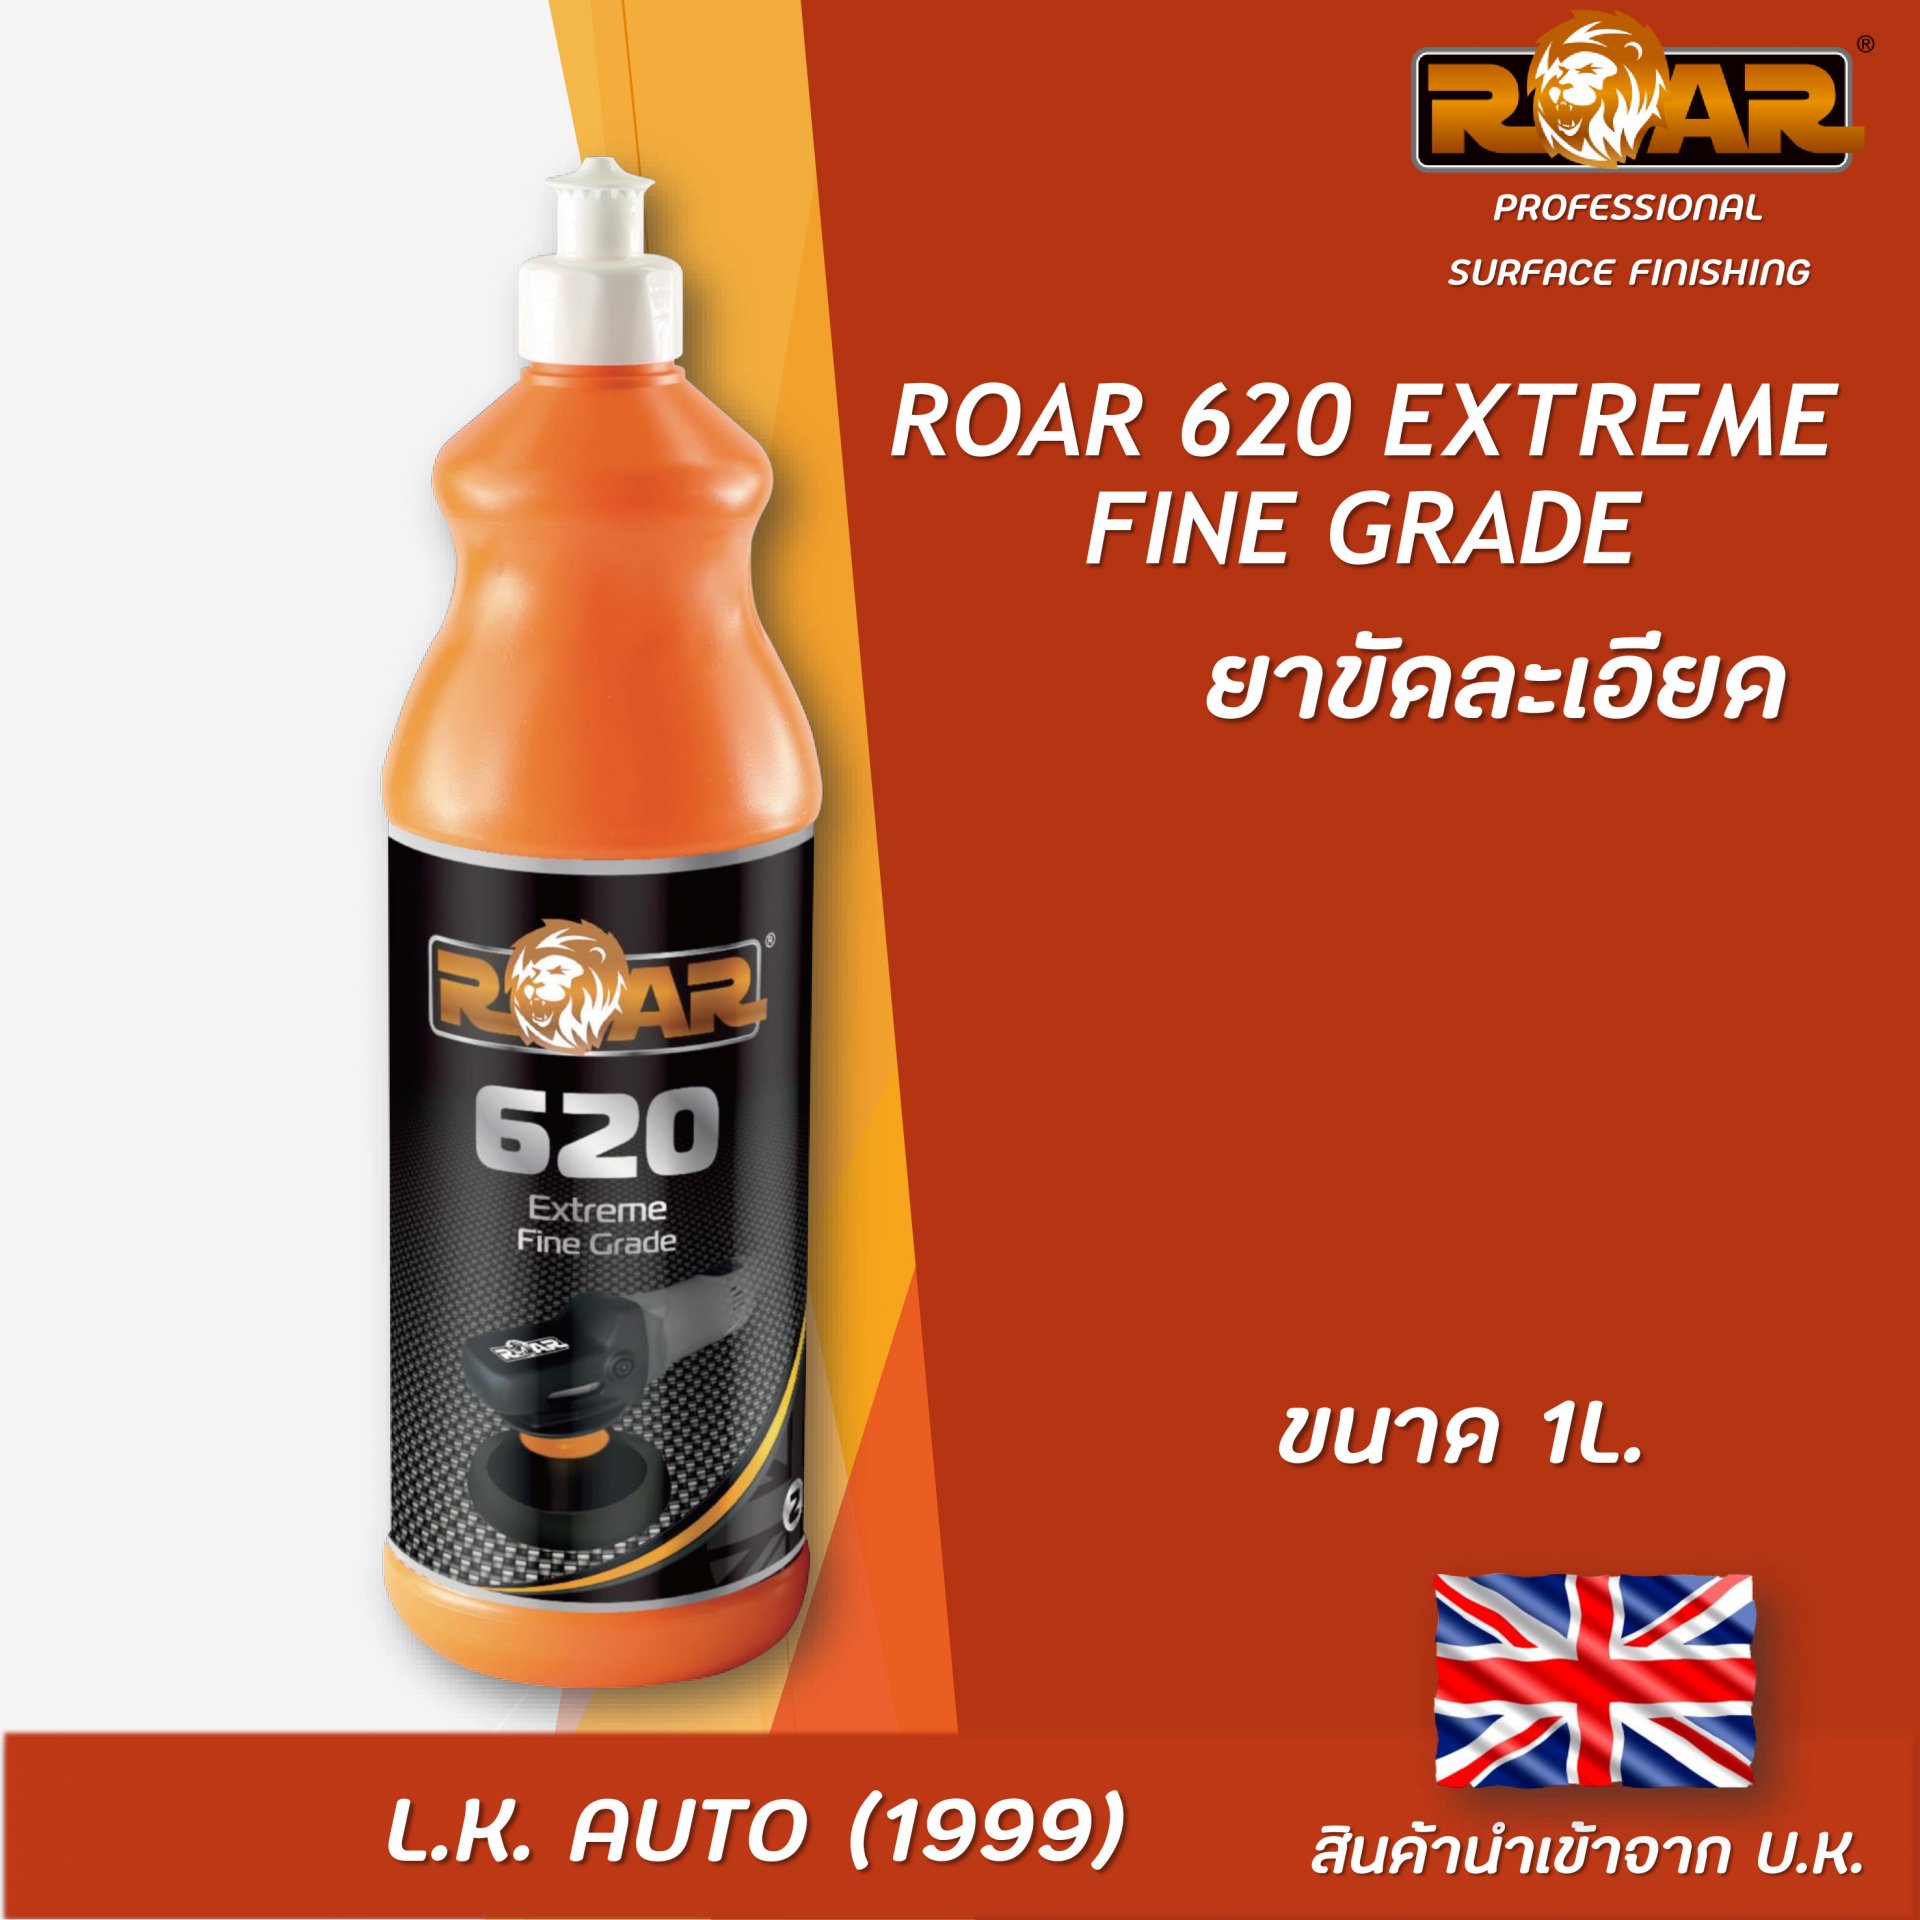 ROAR 620 Extreme Fine Grade